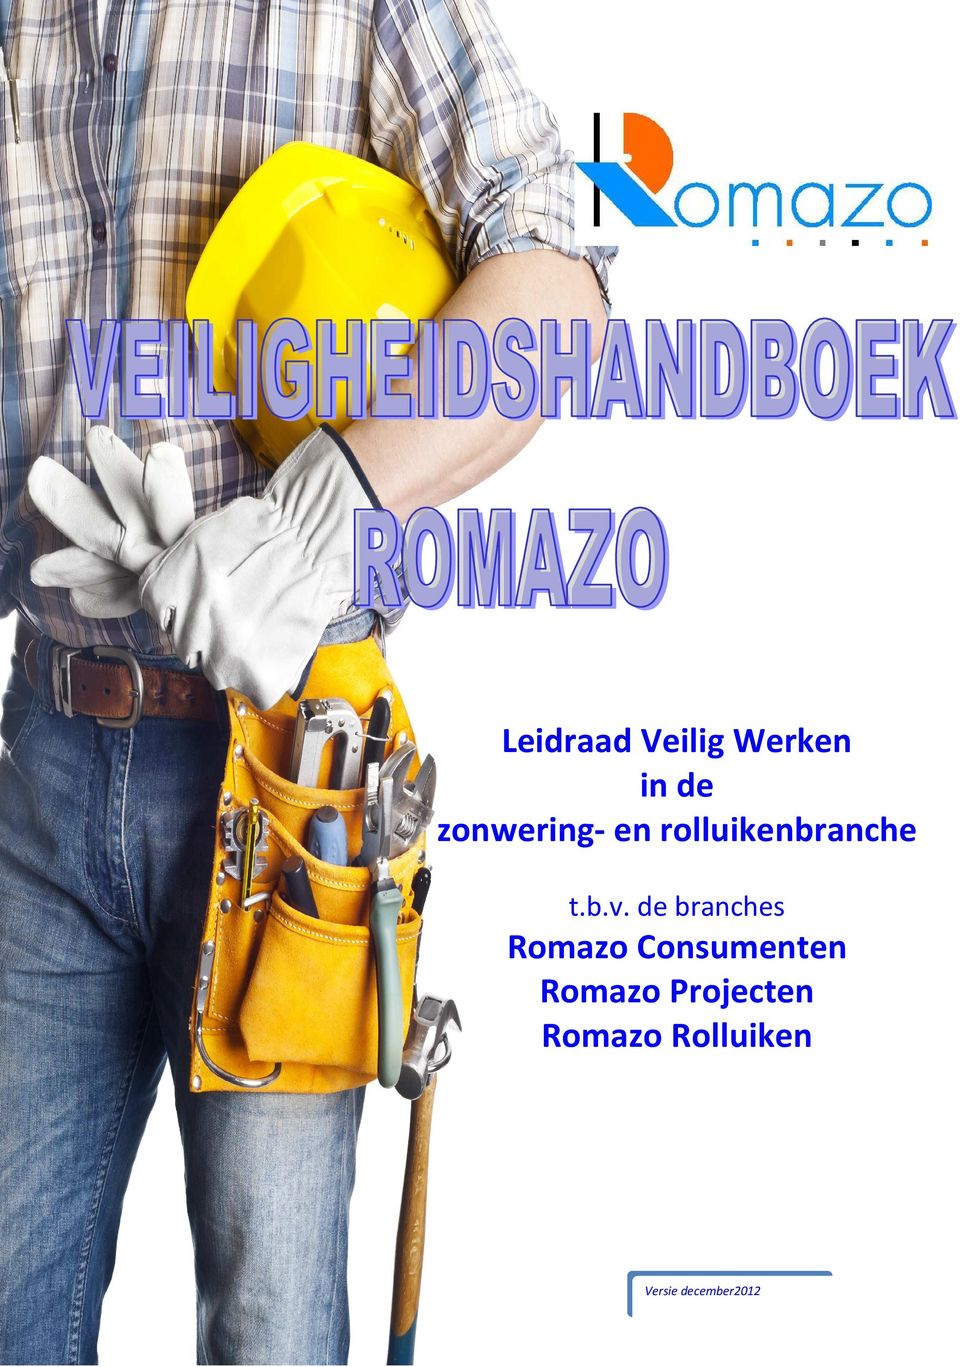 de branches Romazo Consumenten Romazo Projecten